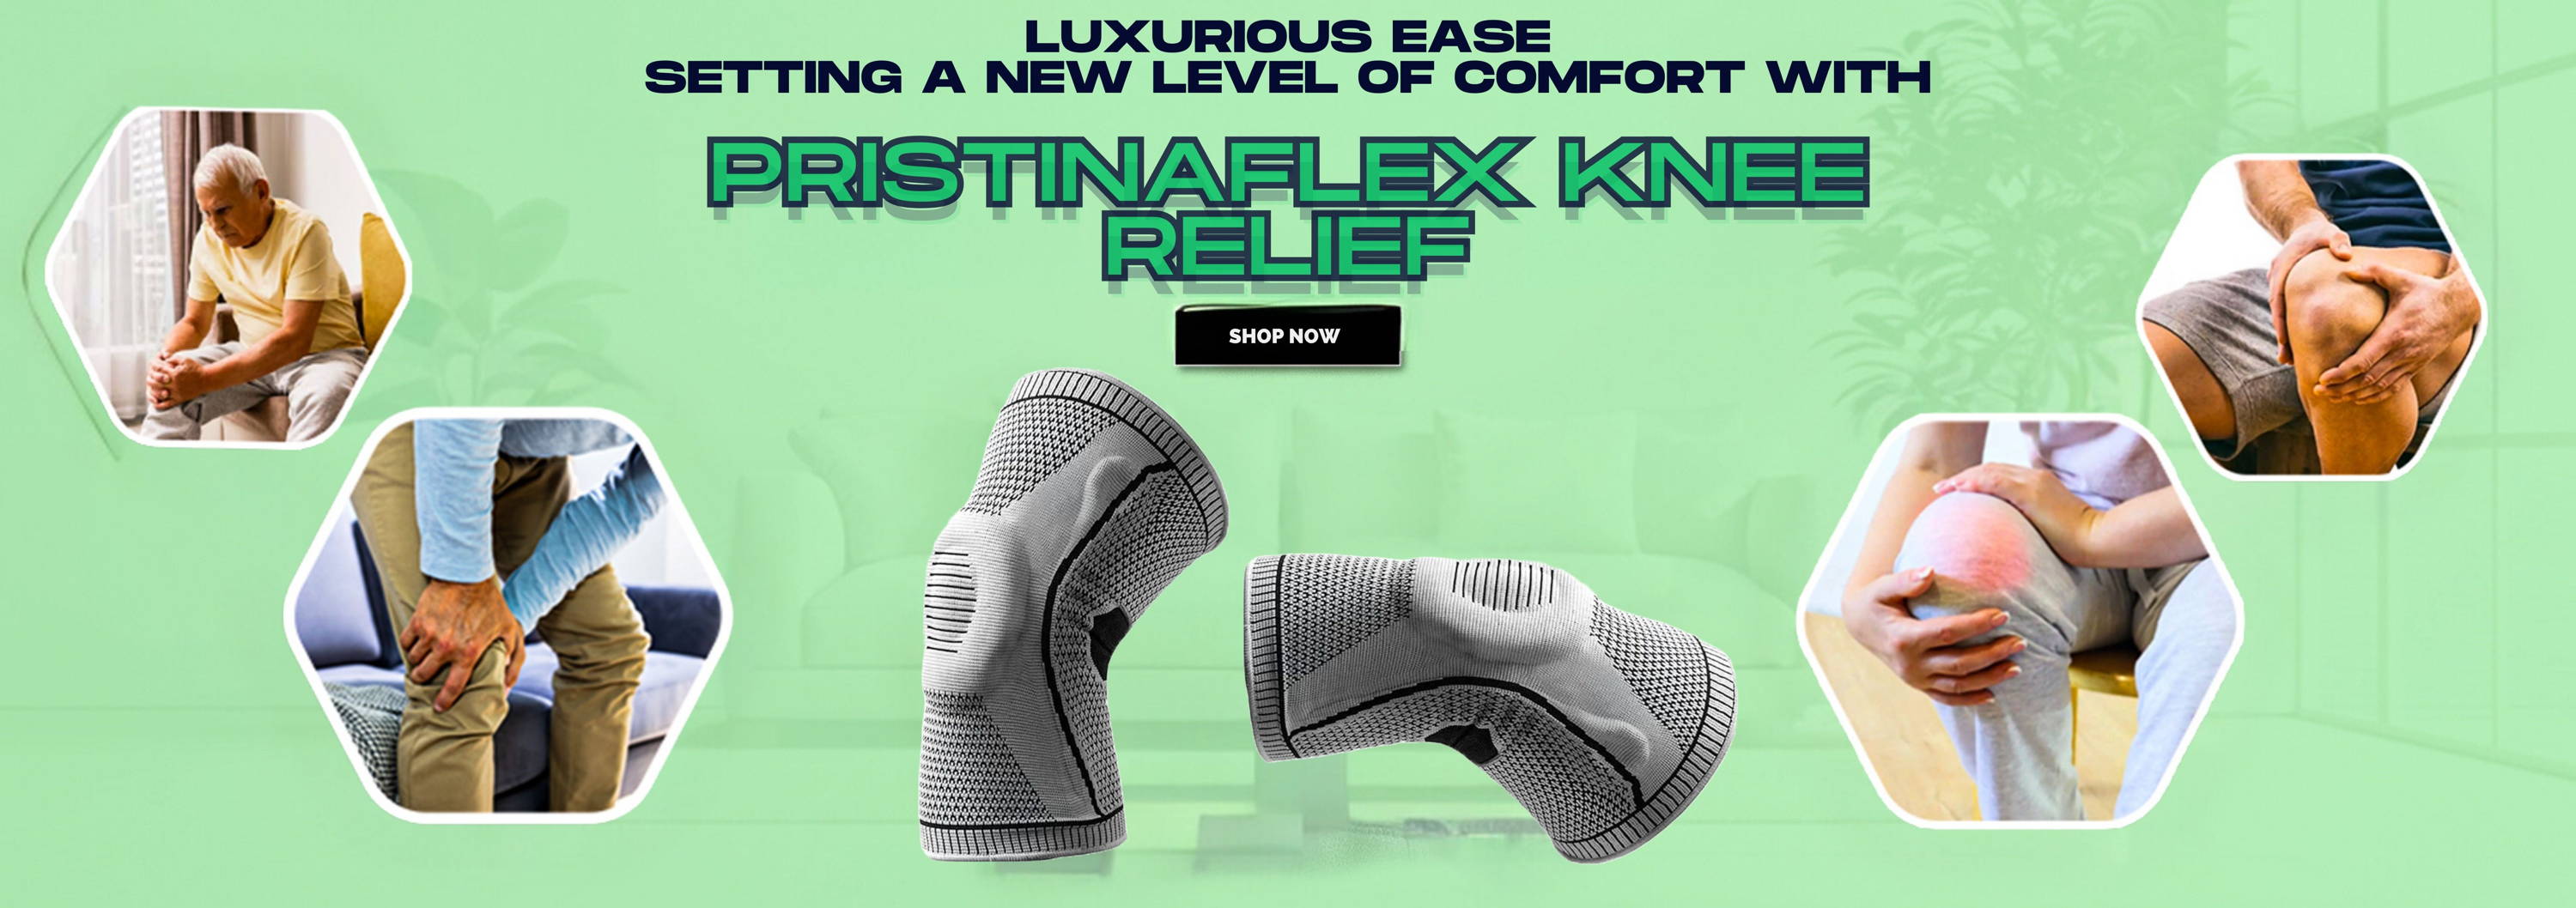 PristinaFlex Knee Relief - Pristina Products - Just £20.99